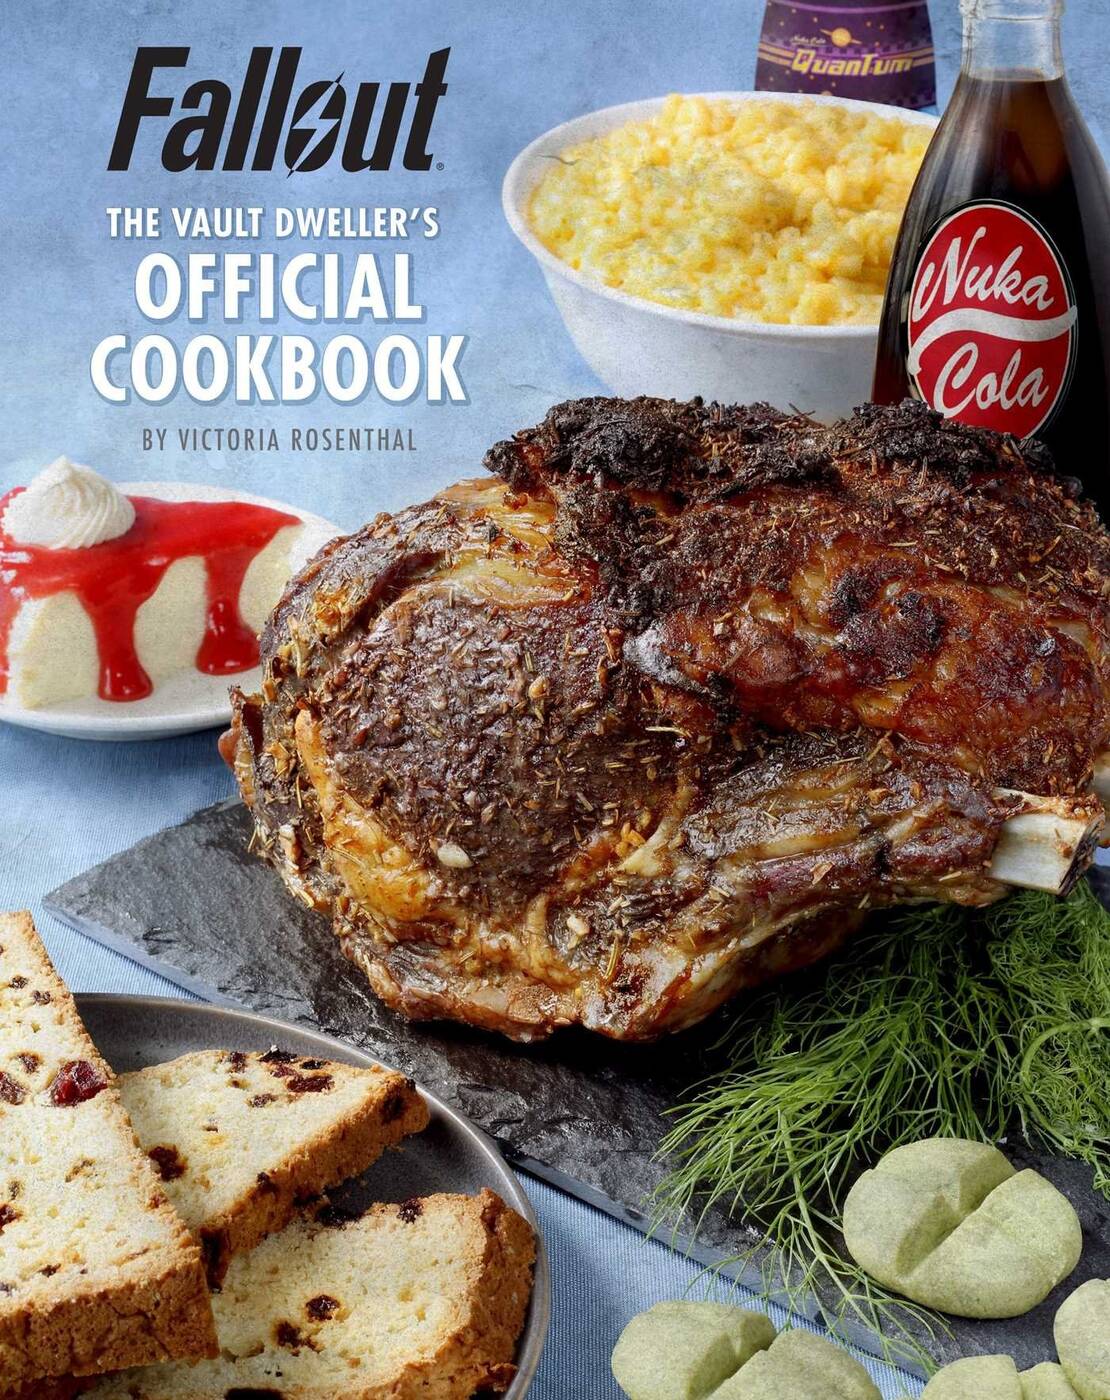 Fallout, potrawy, kuchnia, książka kucharska, The Vault Dweller's Official Cookbook, Vault,